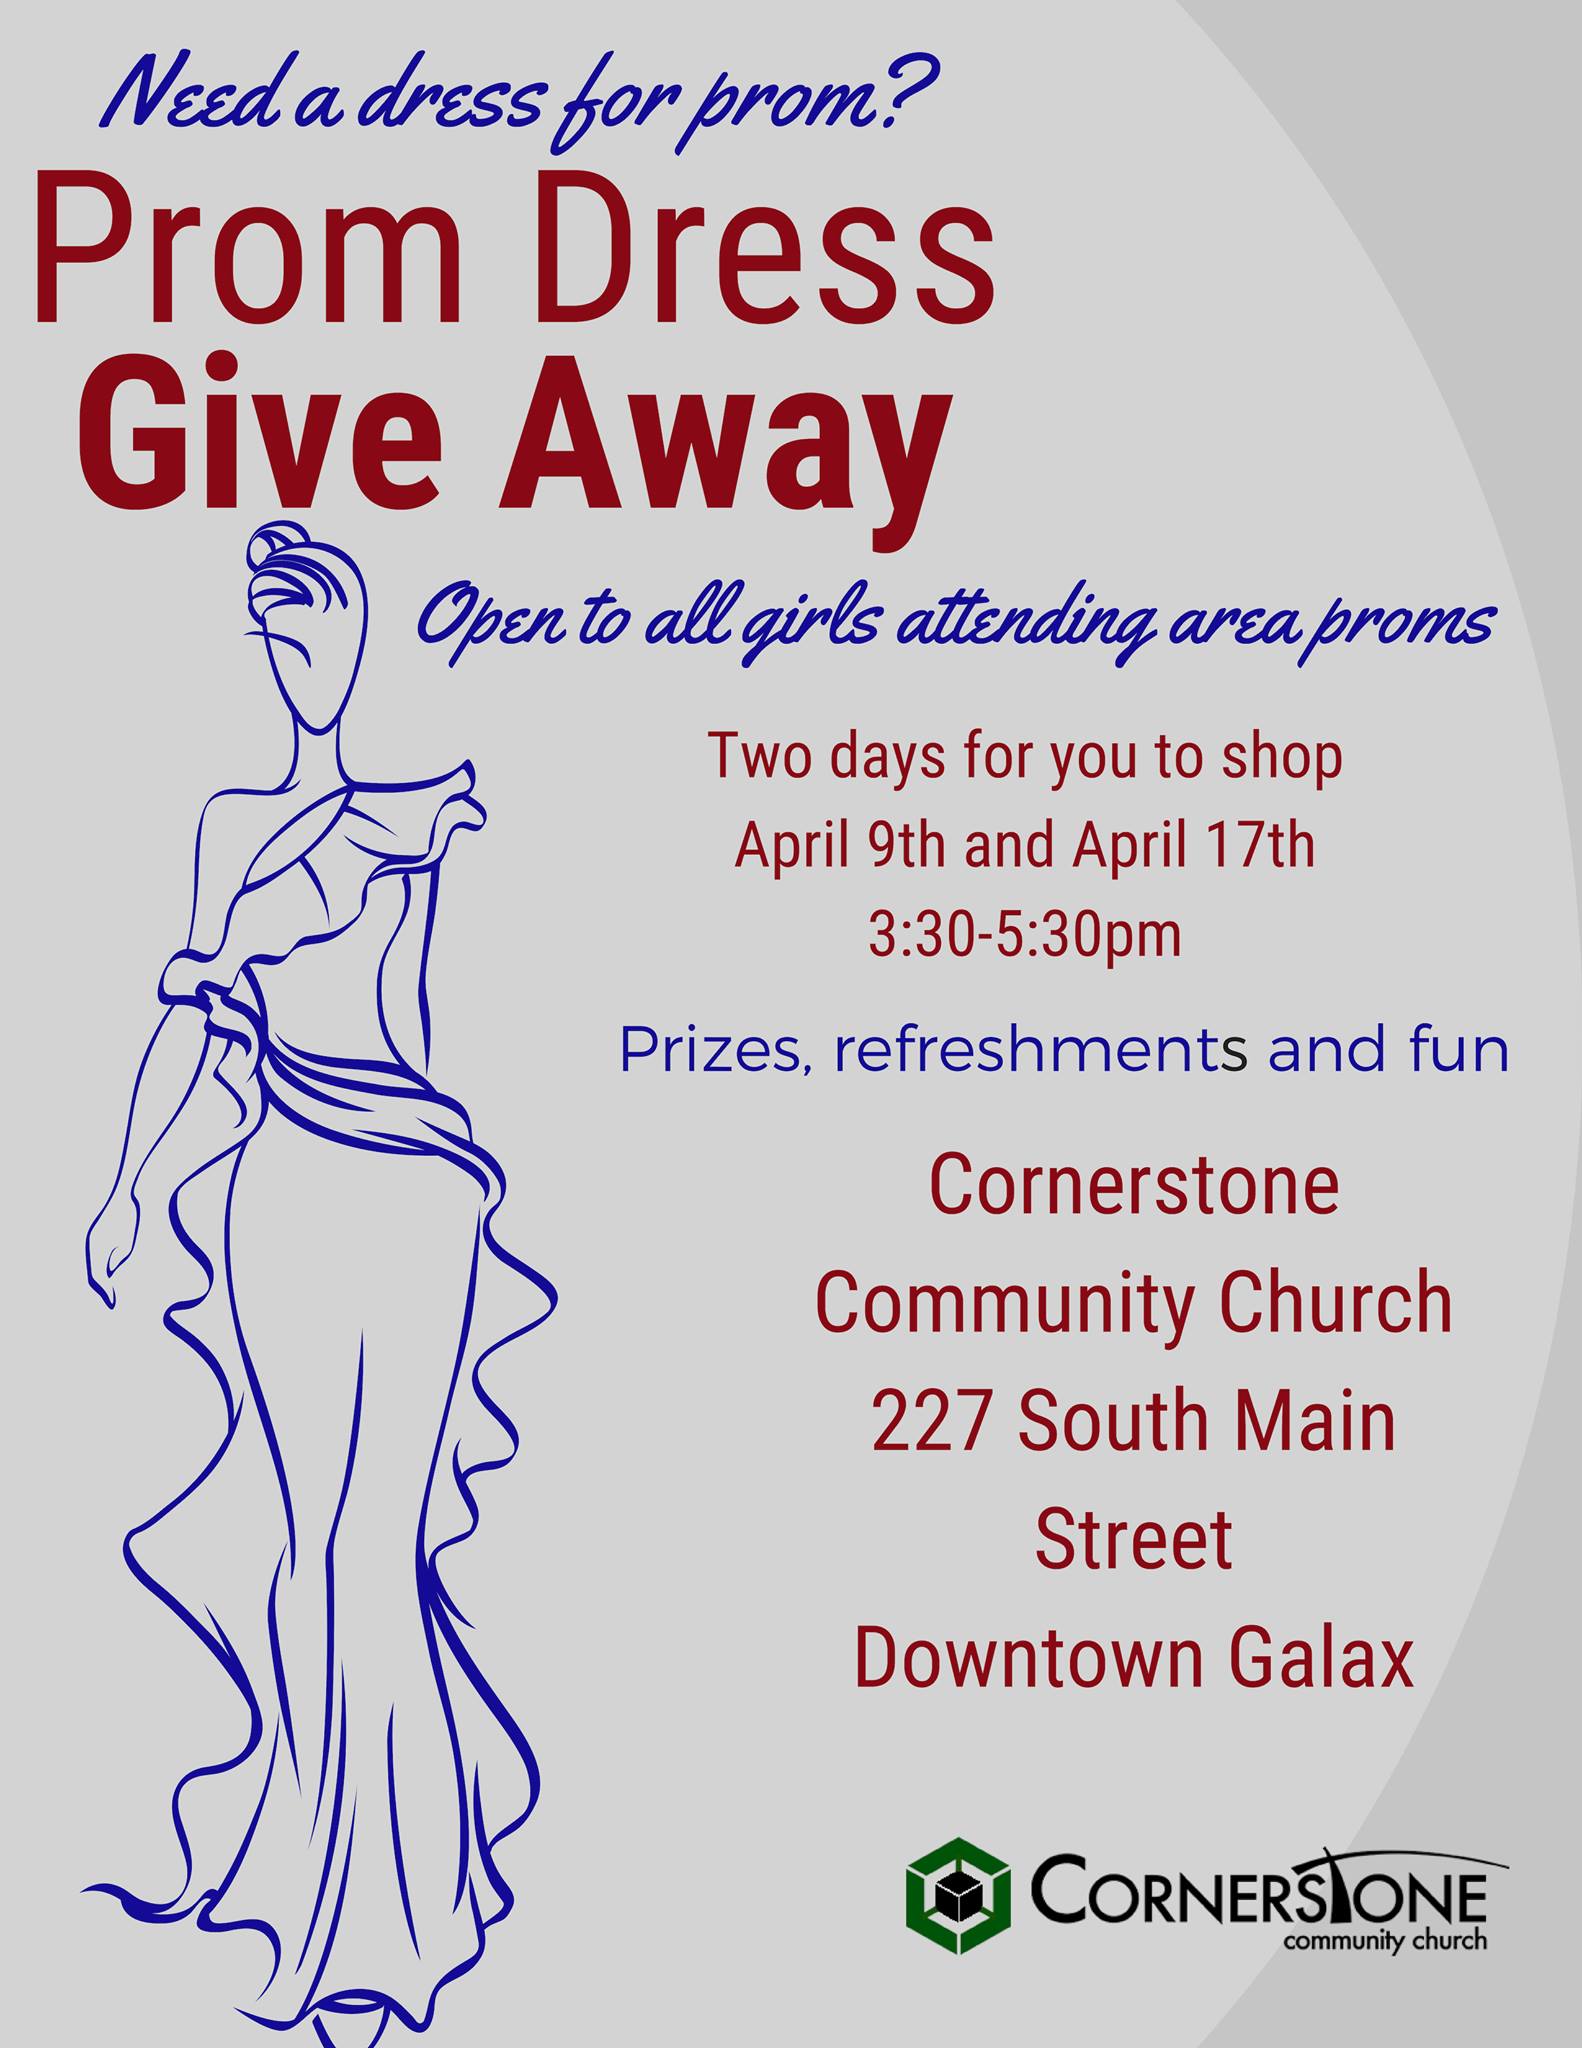 Prom Dress Giveaway - Cornerstone Community Church